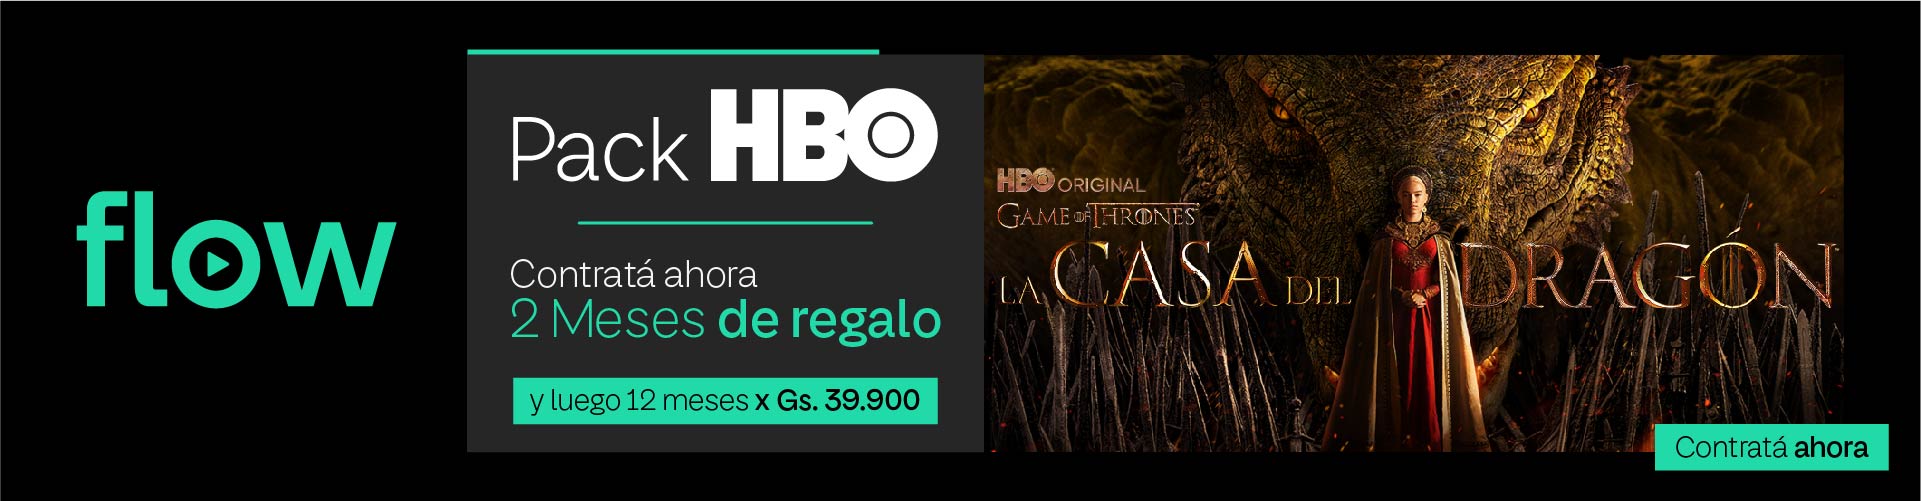 Pack HBO de Flow - La casa del Dragon